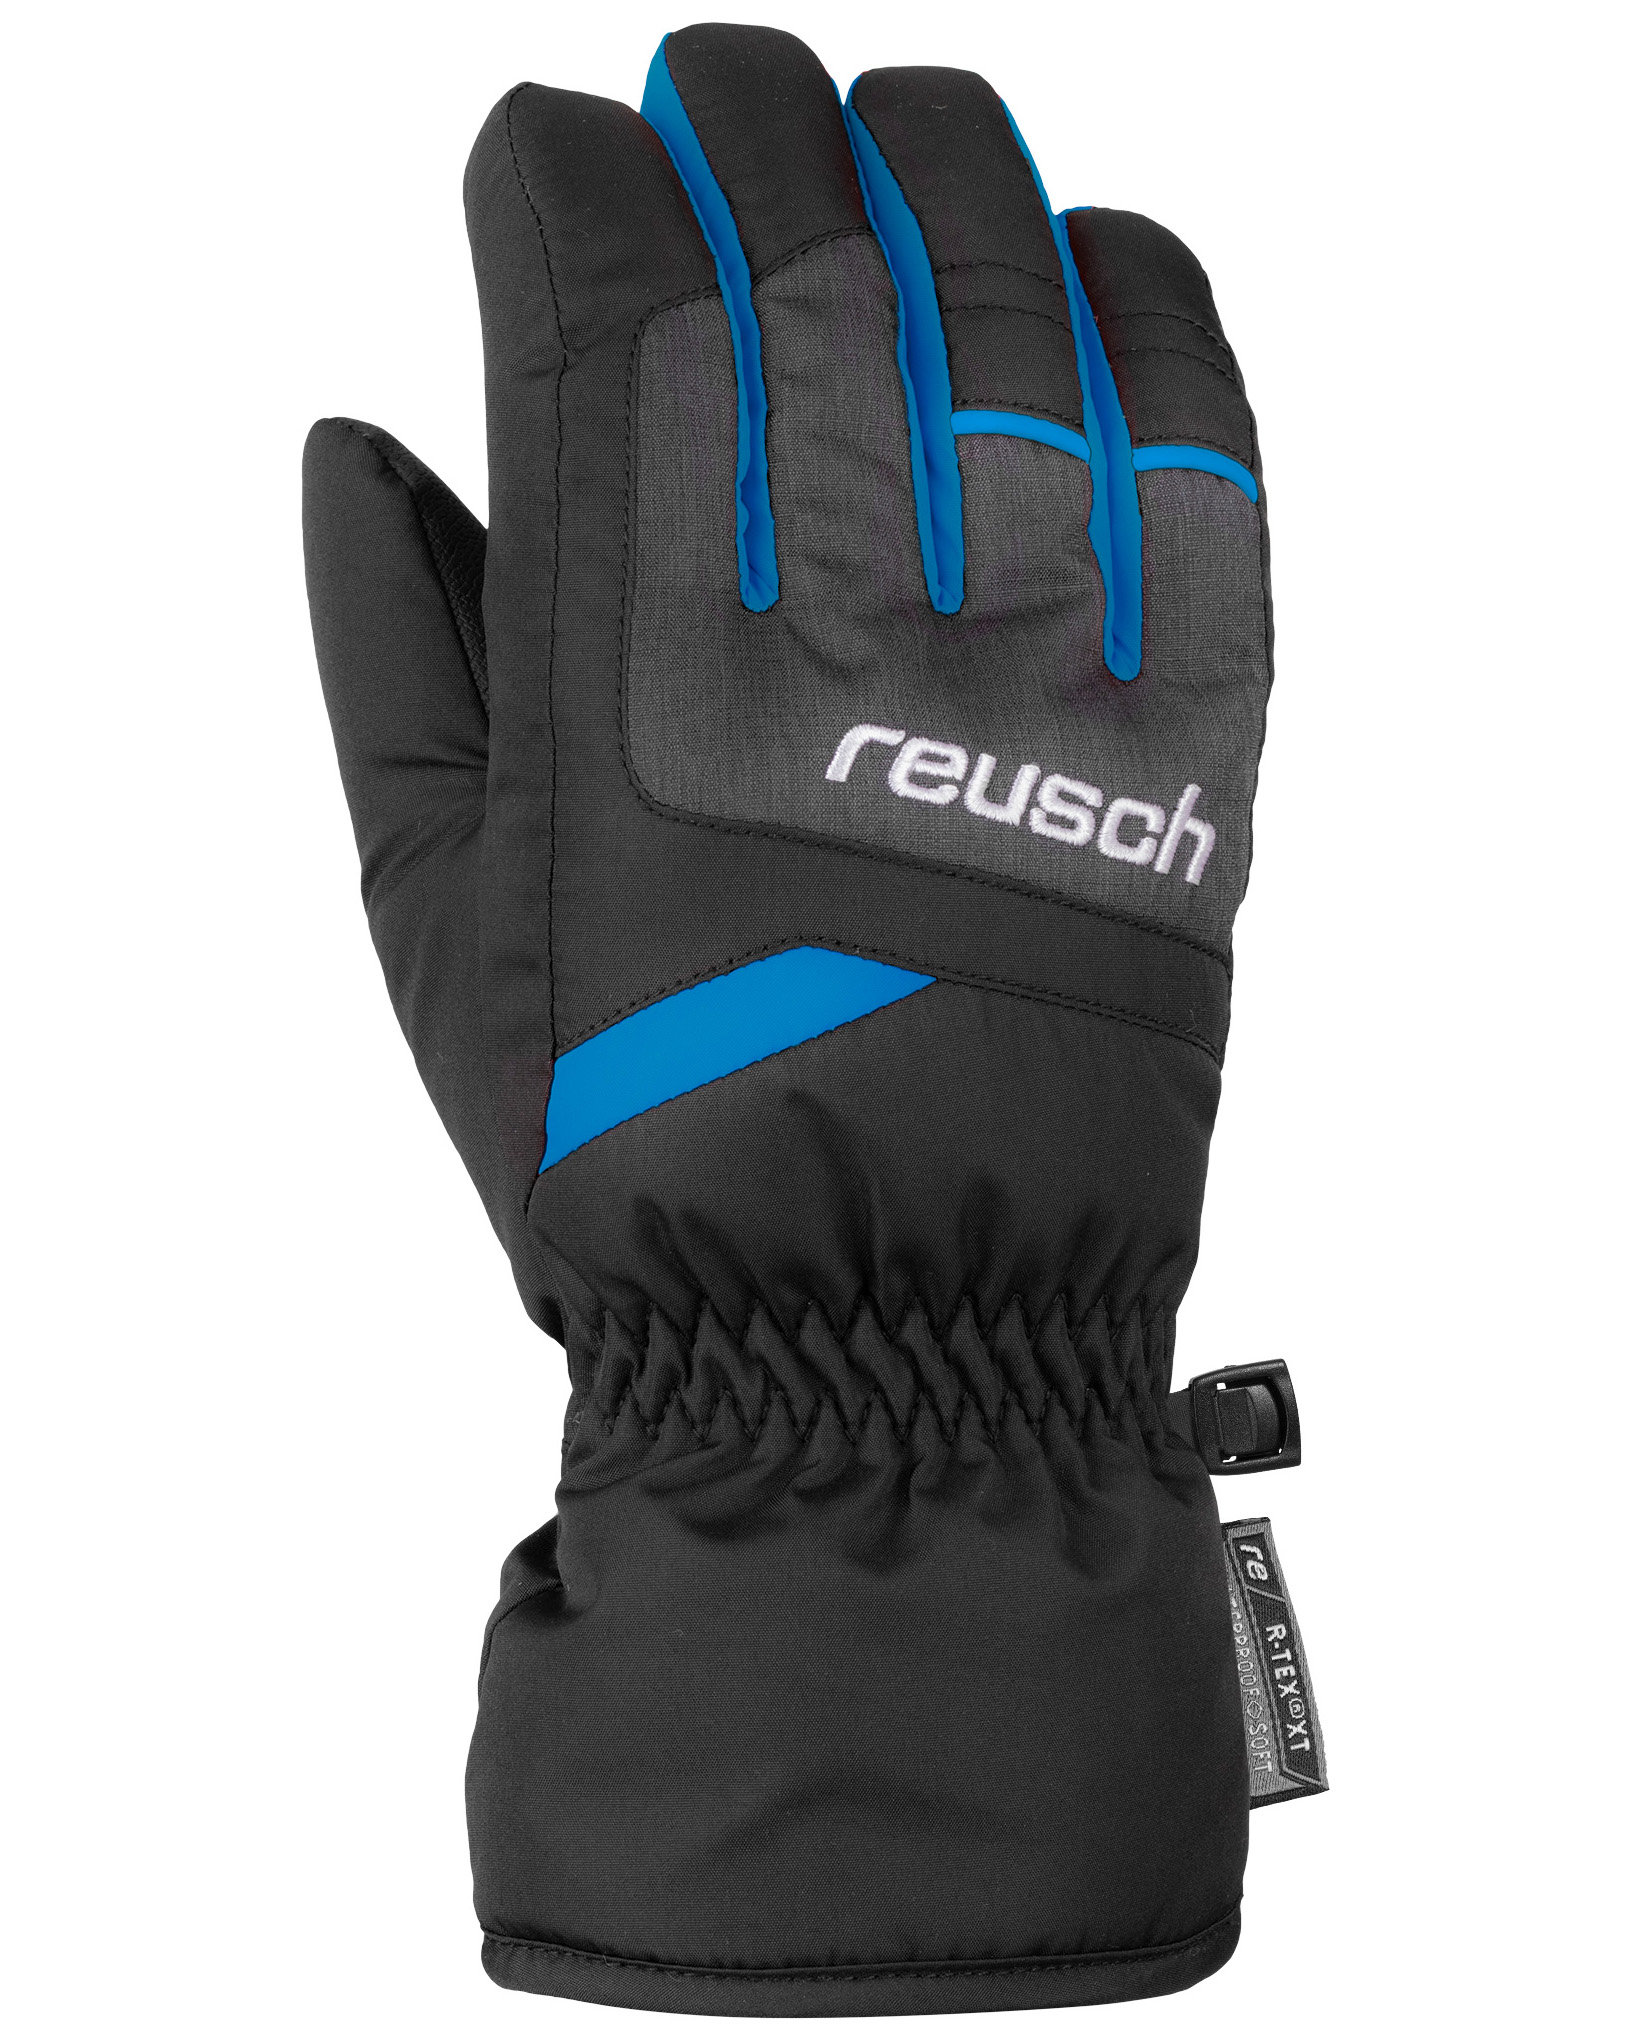 Перчатки Reusch Bennet R-Tex® Xt, black/black melange/brilliant blue, 6.5 Inch велосипед merida matts j20 eco 2021 silk candy pink purple blue 20 24см 2021